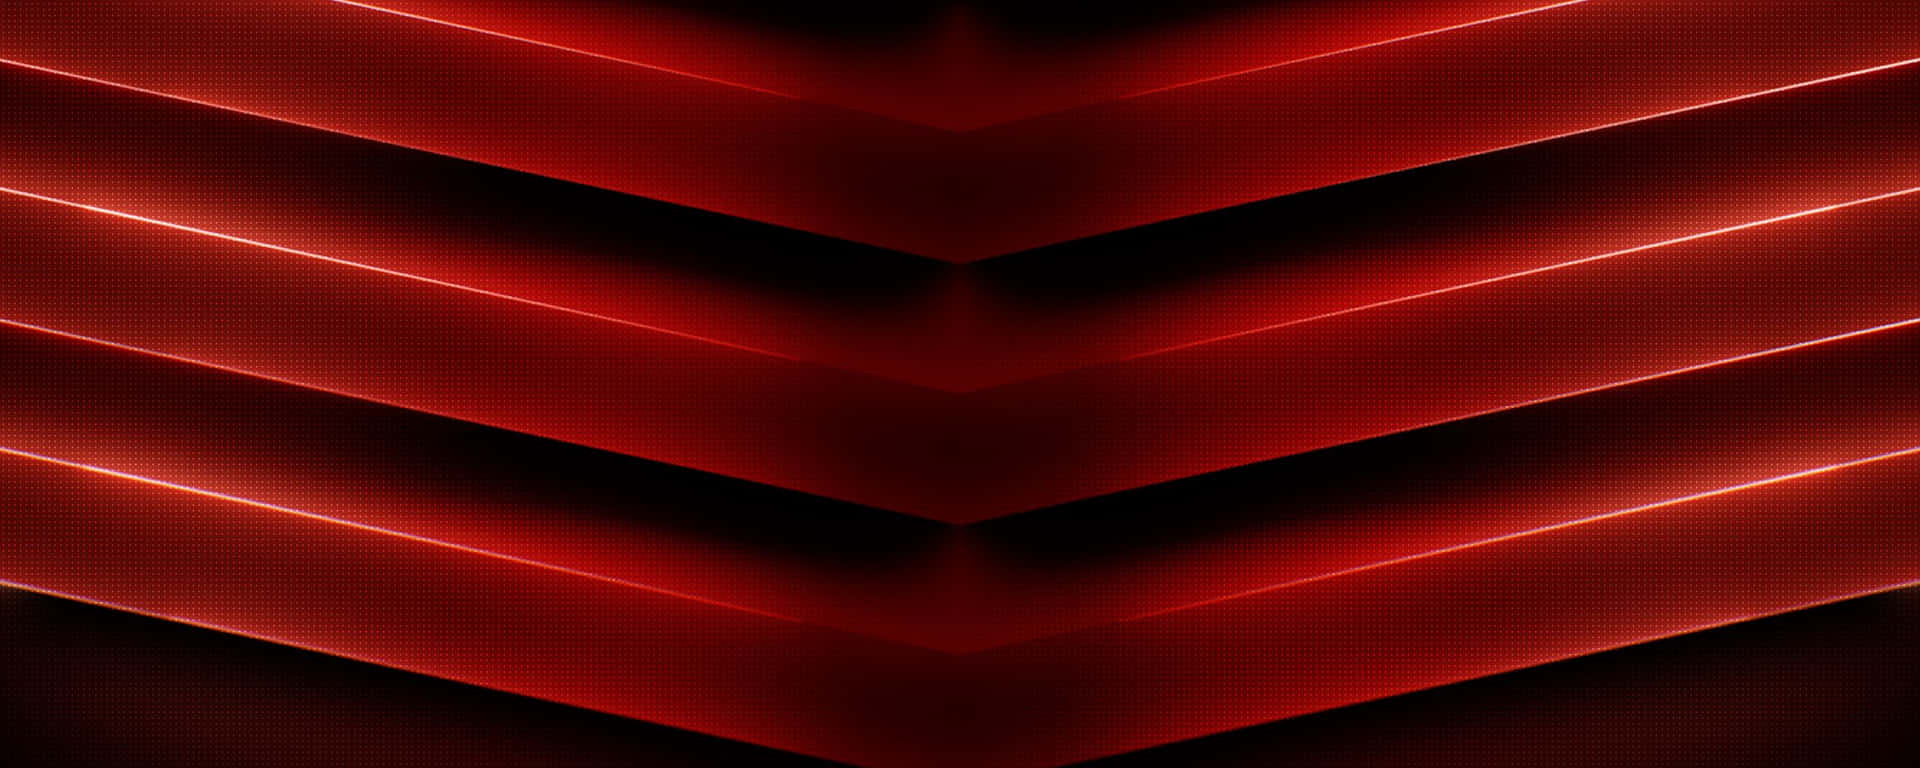 Metalesen Forma De V Rojo Ultra Wide Hd Fondo de pantalla